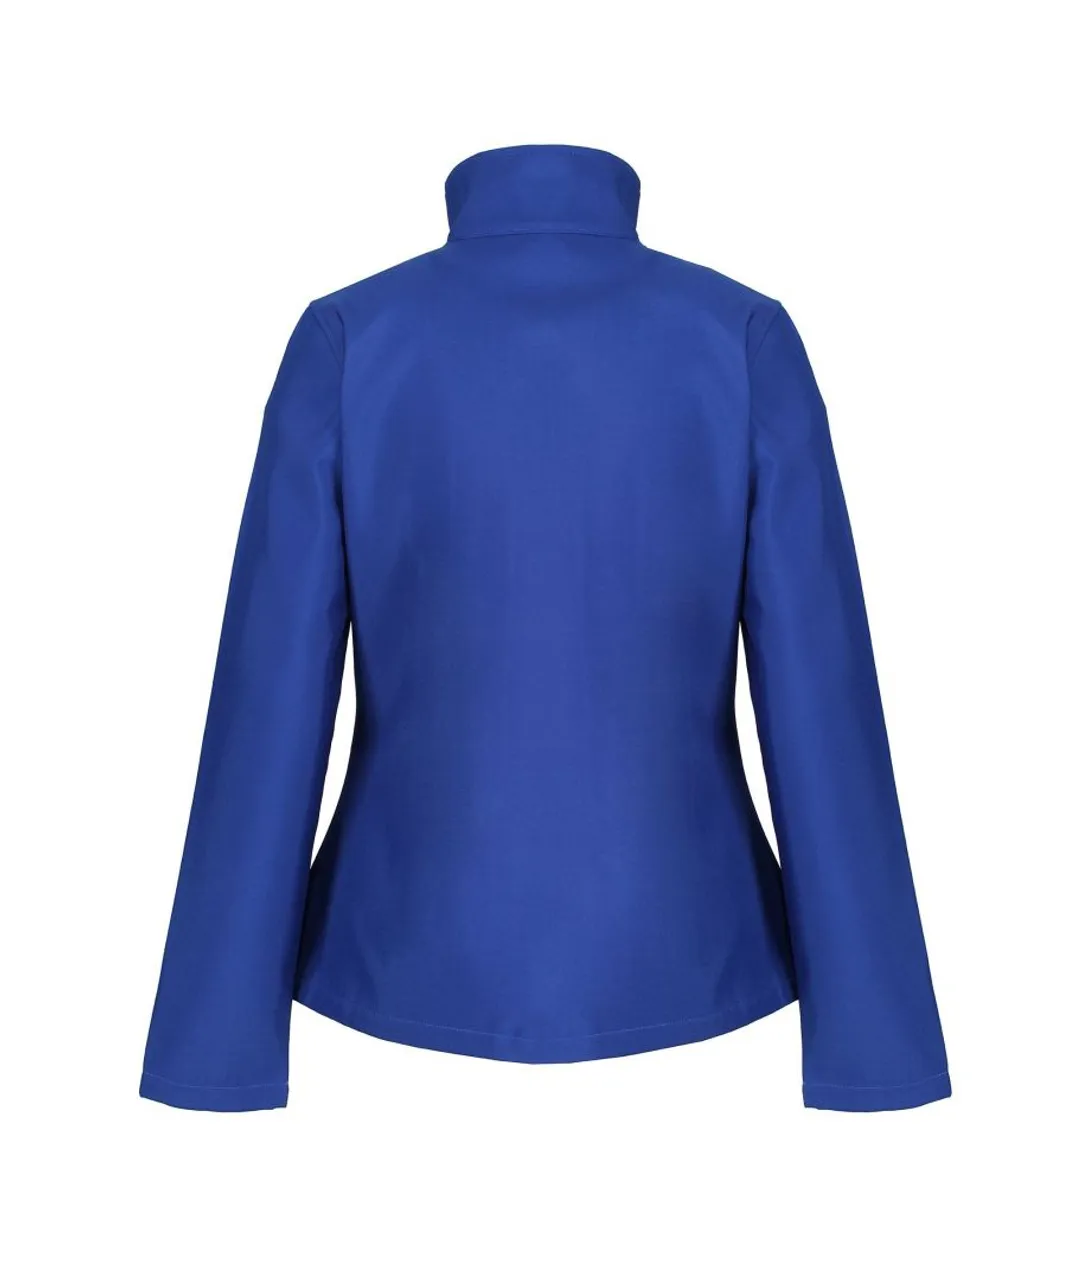 Regatta Standout Womens/Ladies Ablaze Printable Soft Shell Jacket (Royal Blue/Black) - Multicolour